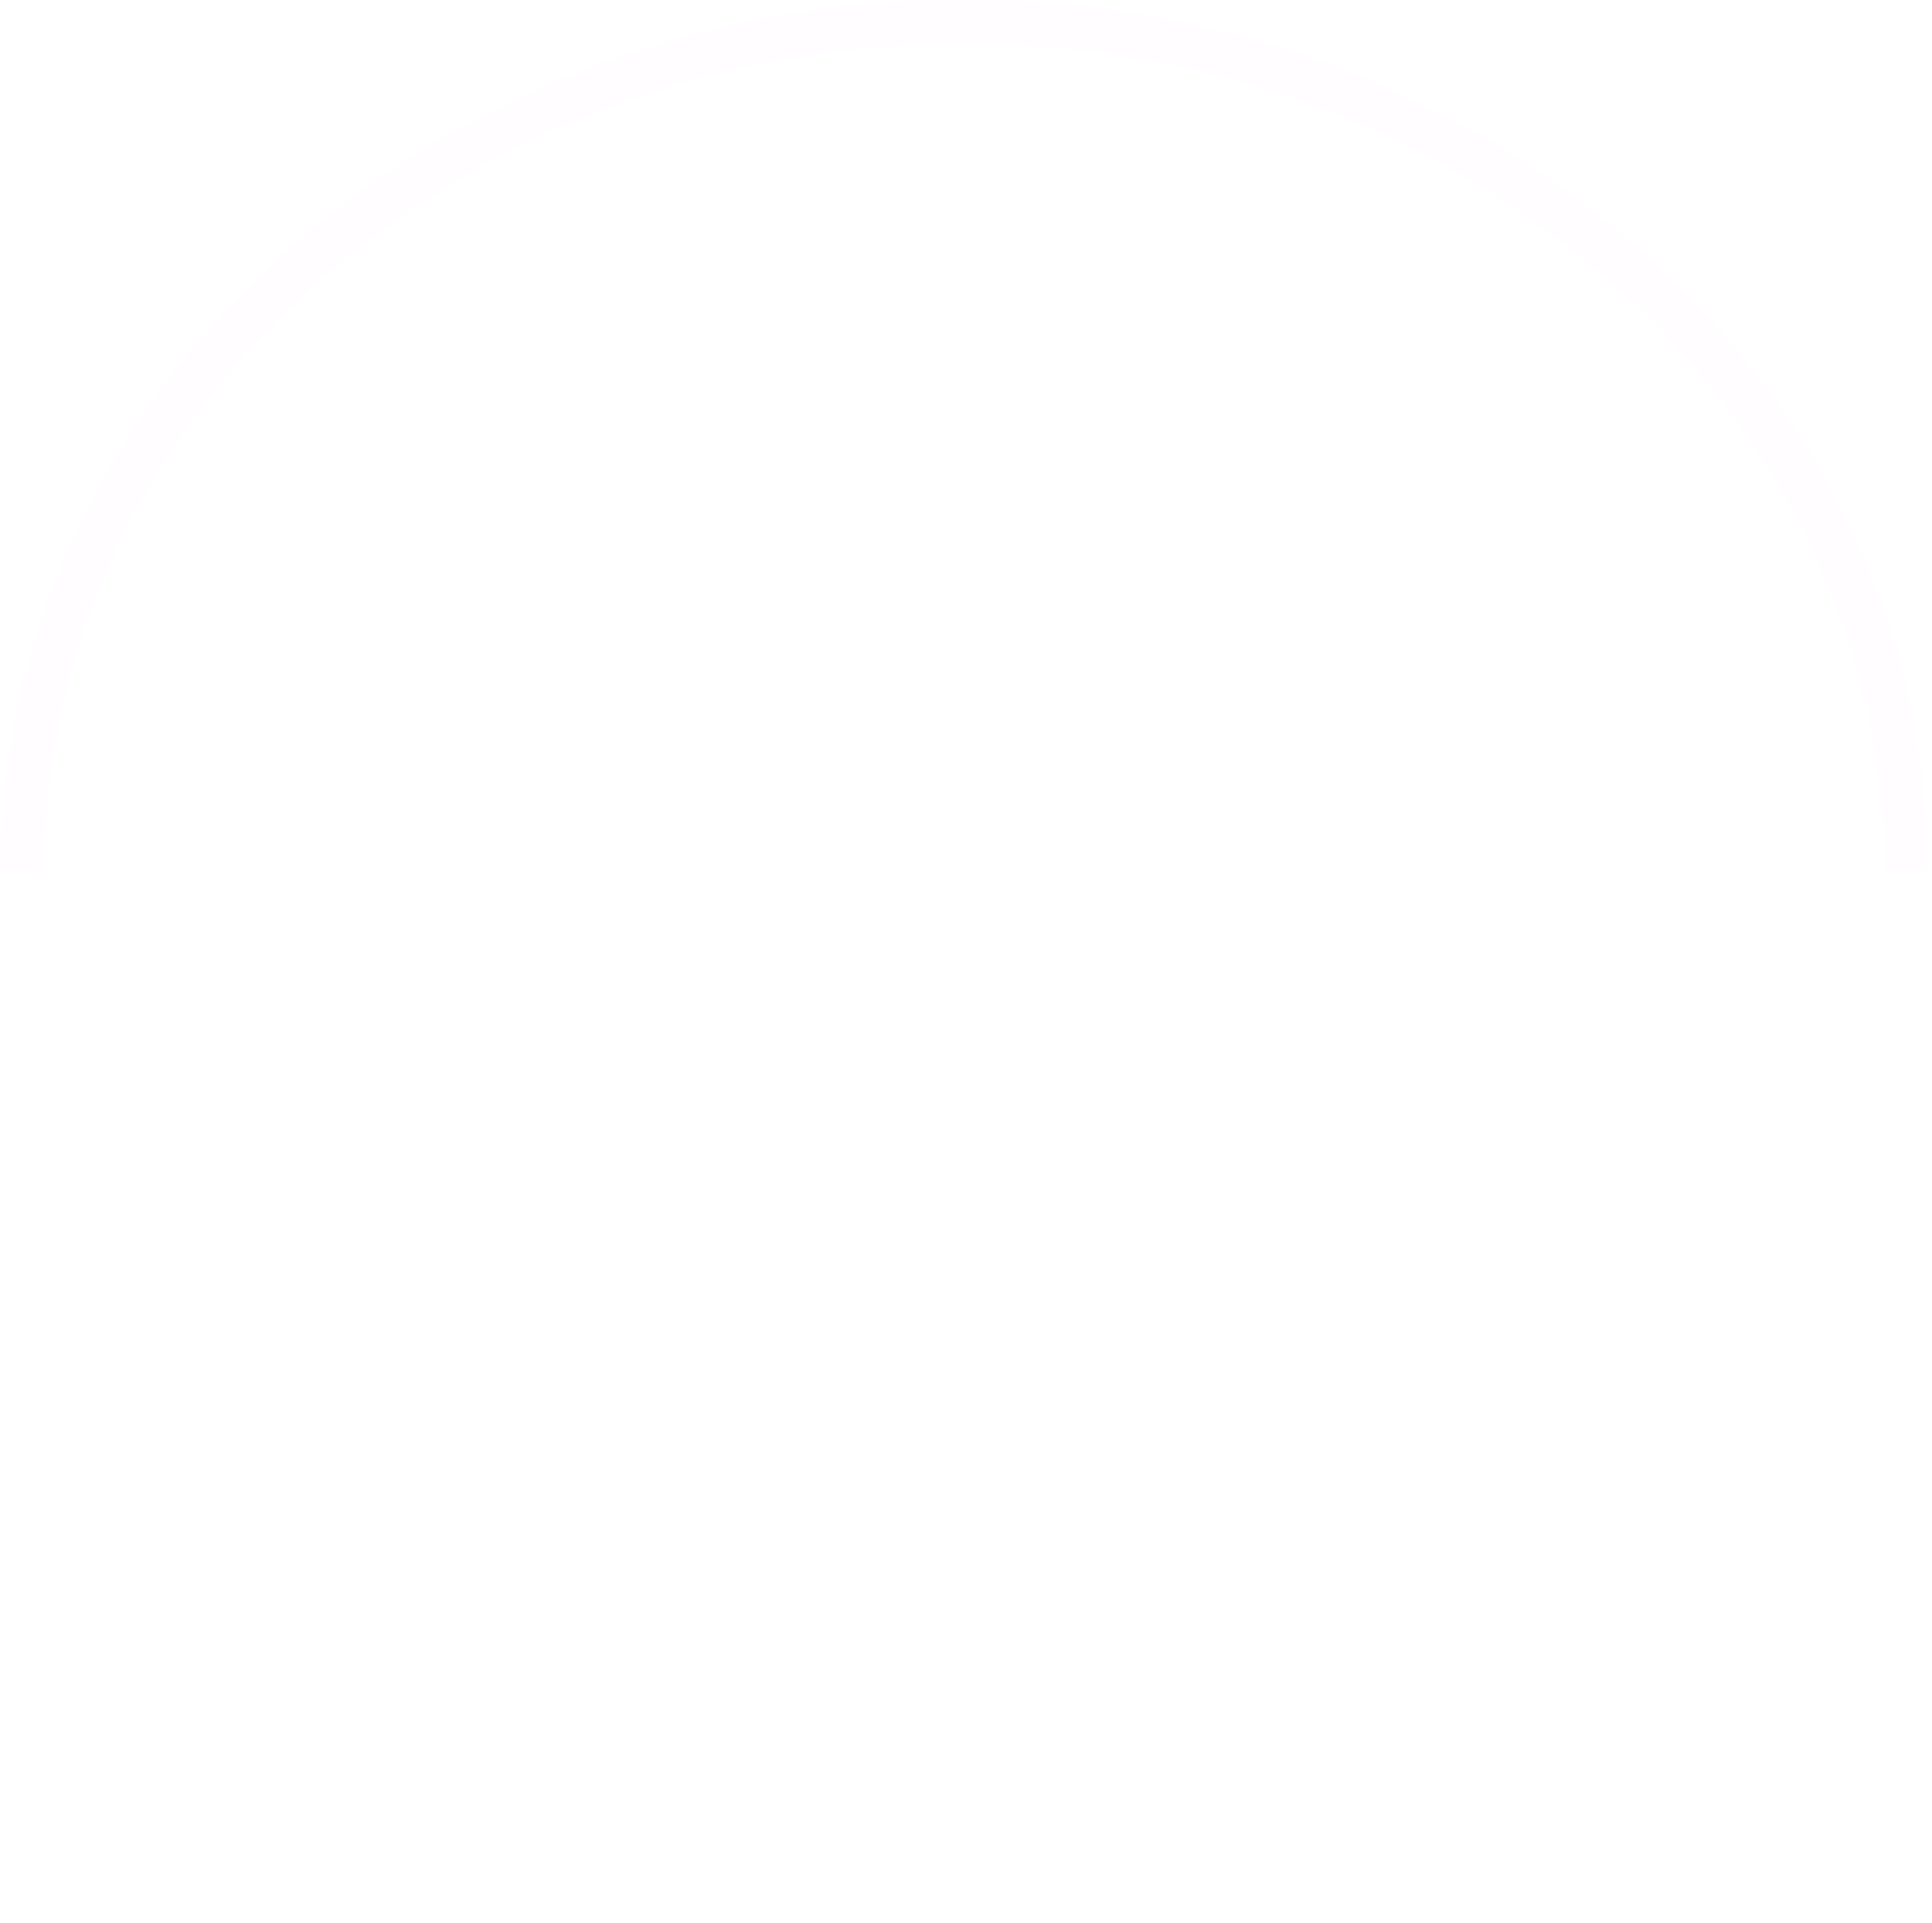 Scola's Italian Cookies logo scroll